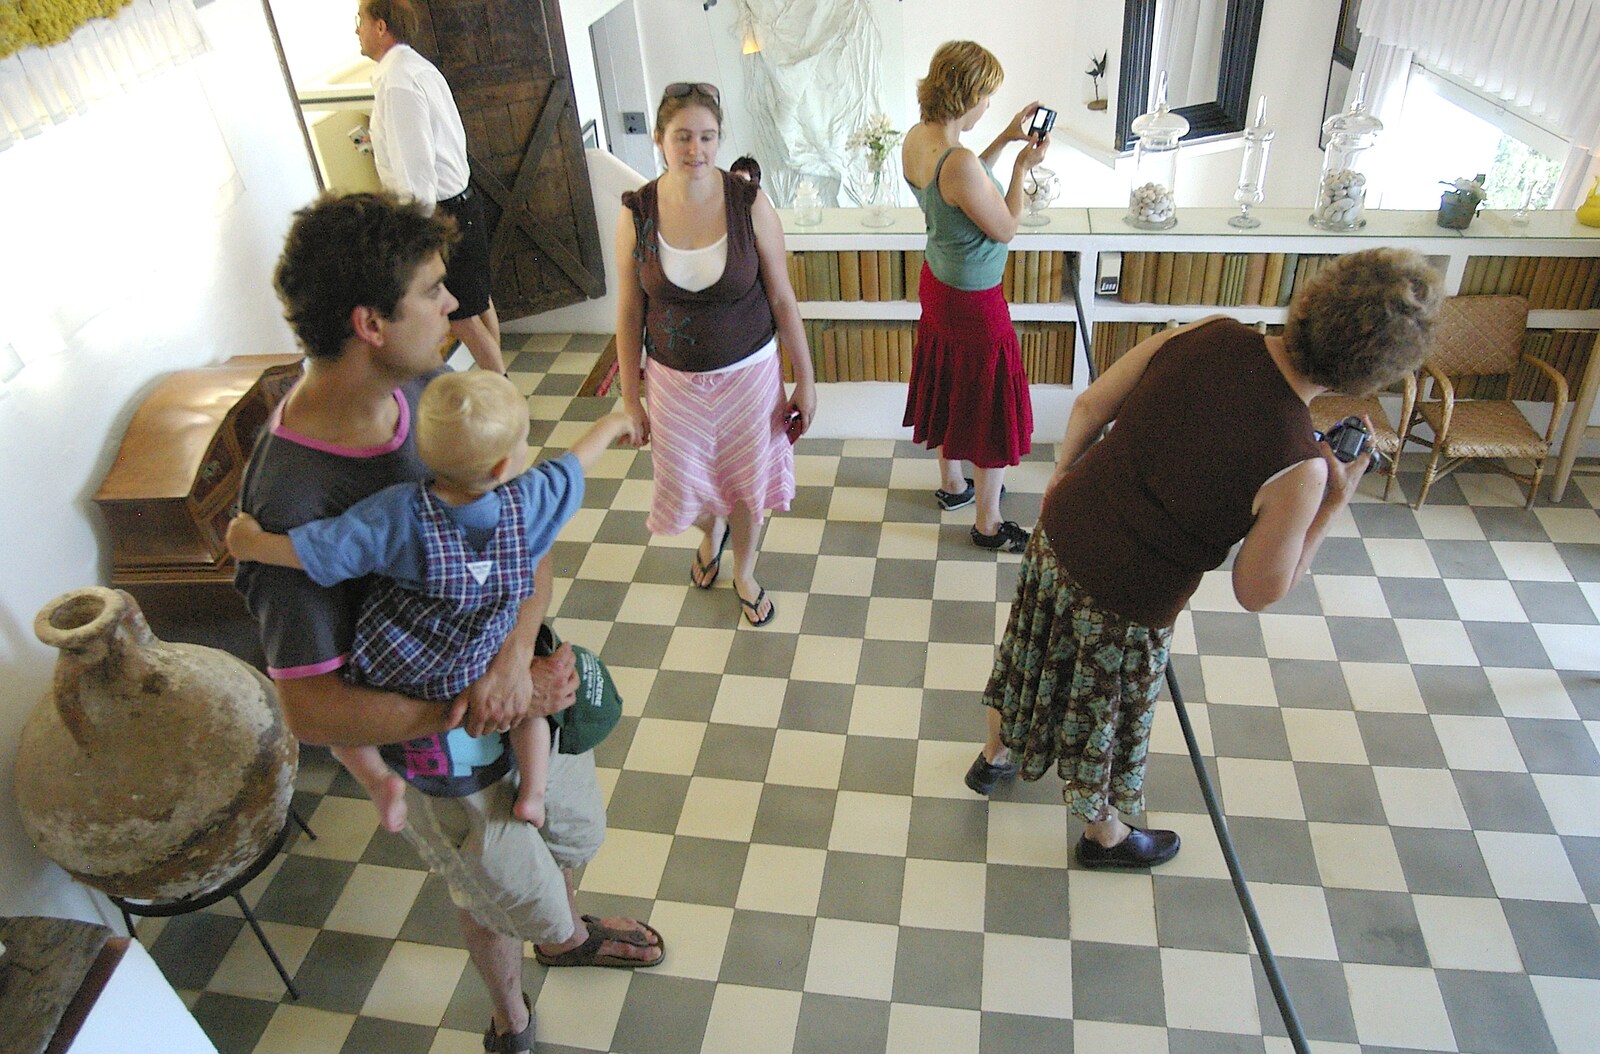 The gang roam around from Salvador Dalí's House, Port Lligat, Spain - 19th Deptember 2006